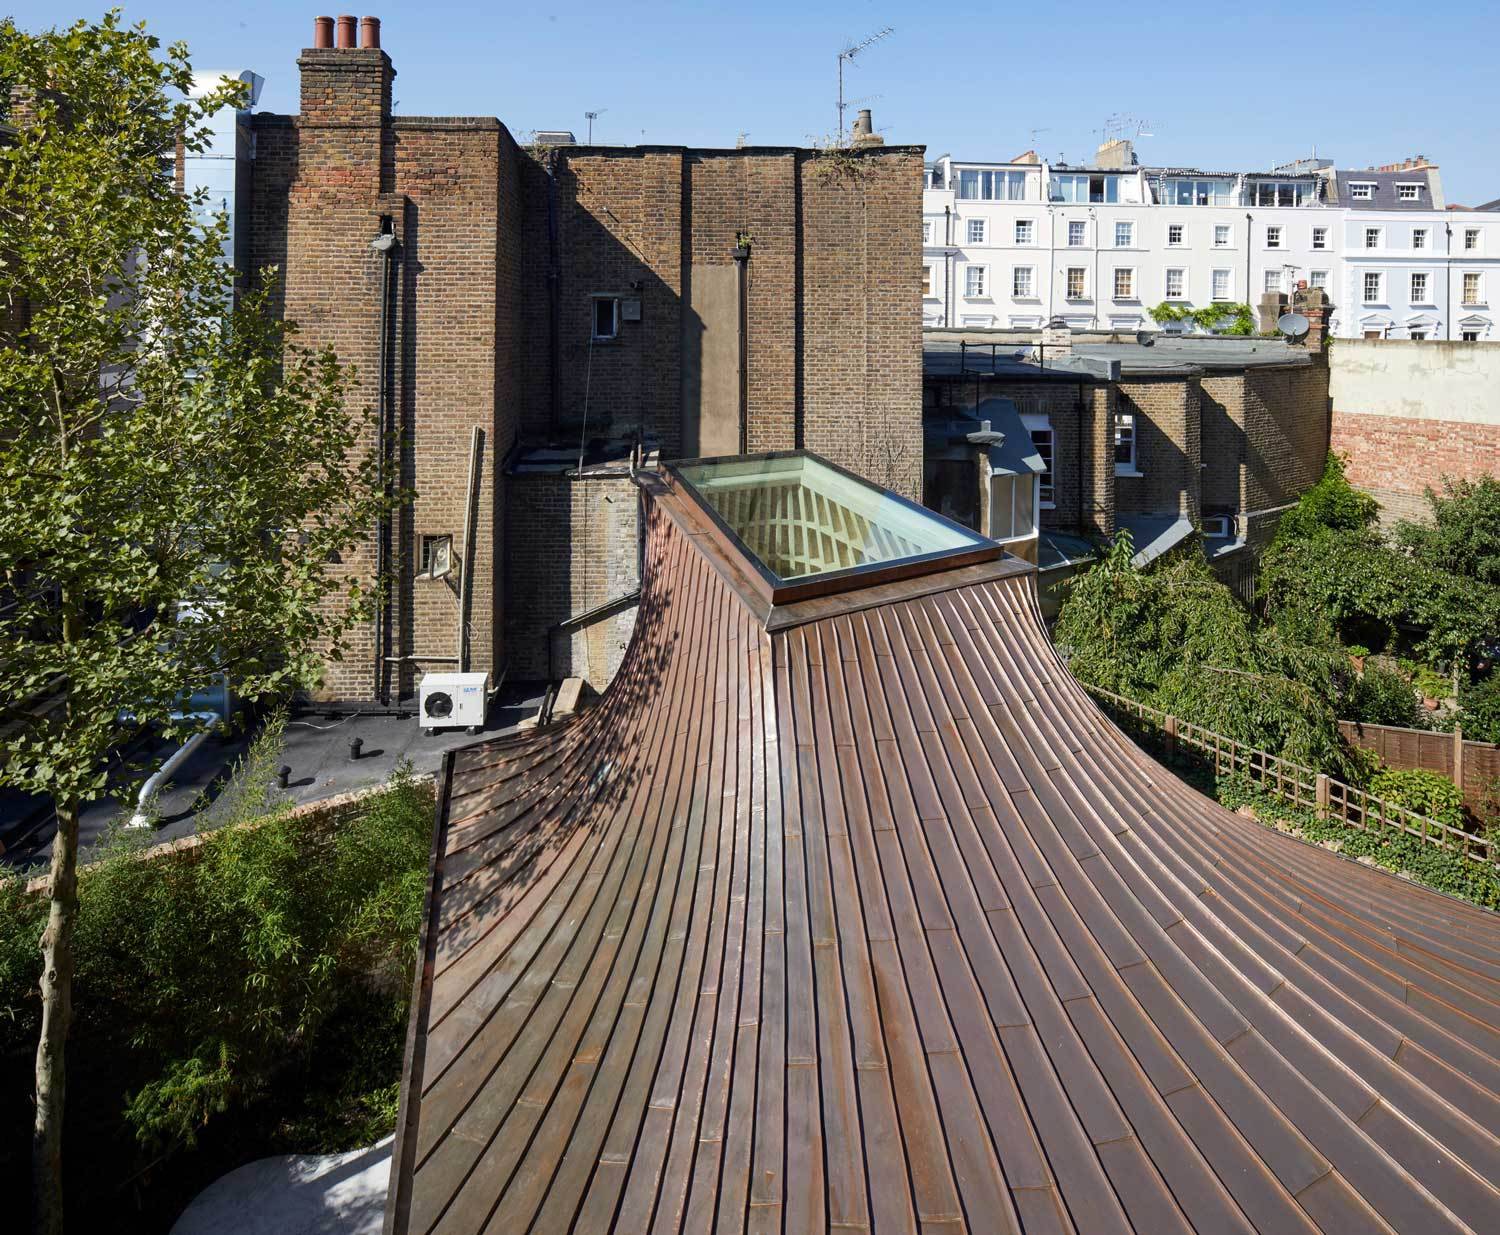 Casa en Notting Hill, por Gianni Botsford Architects.